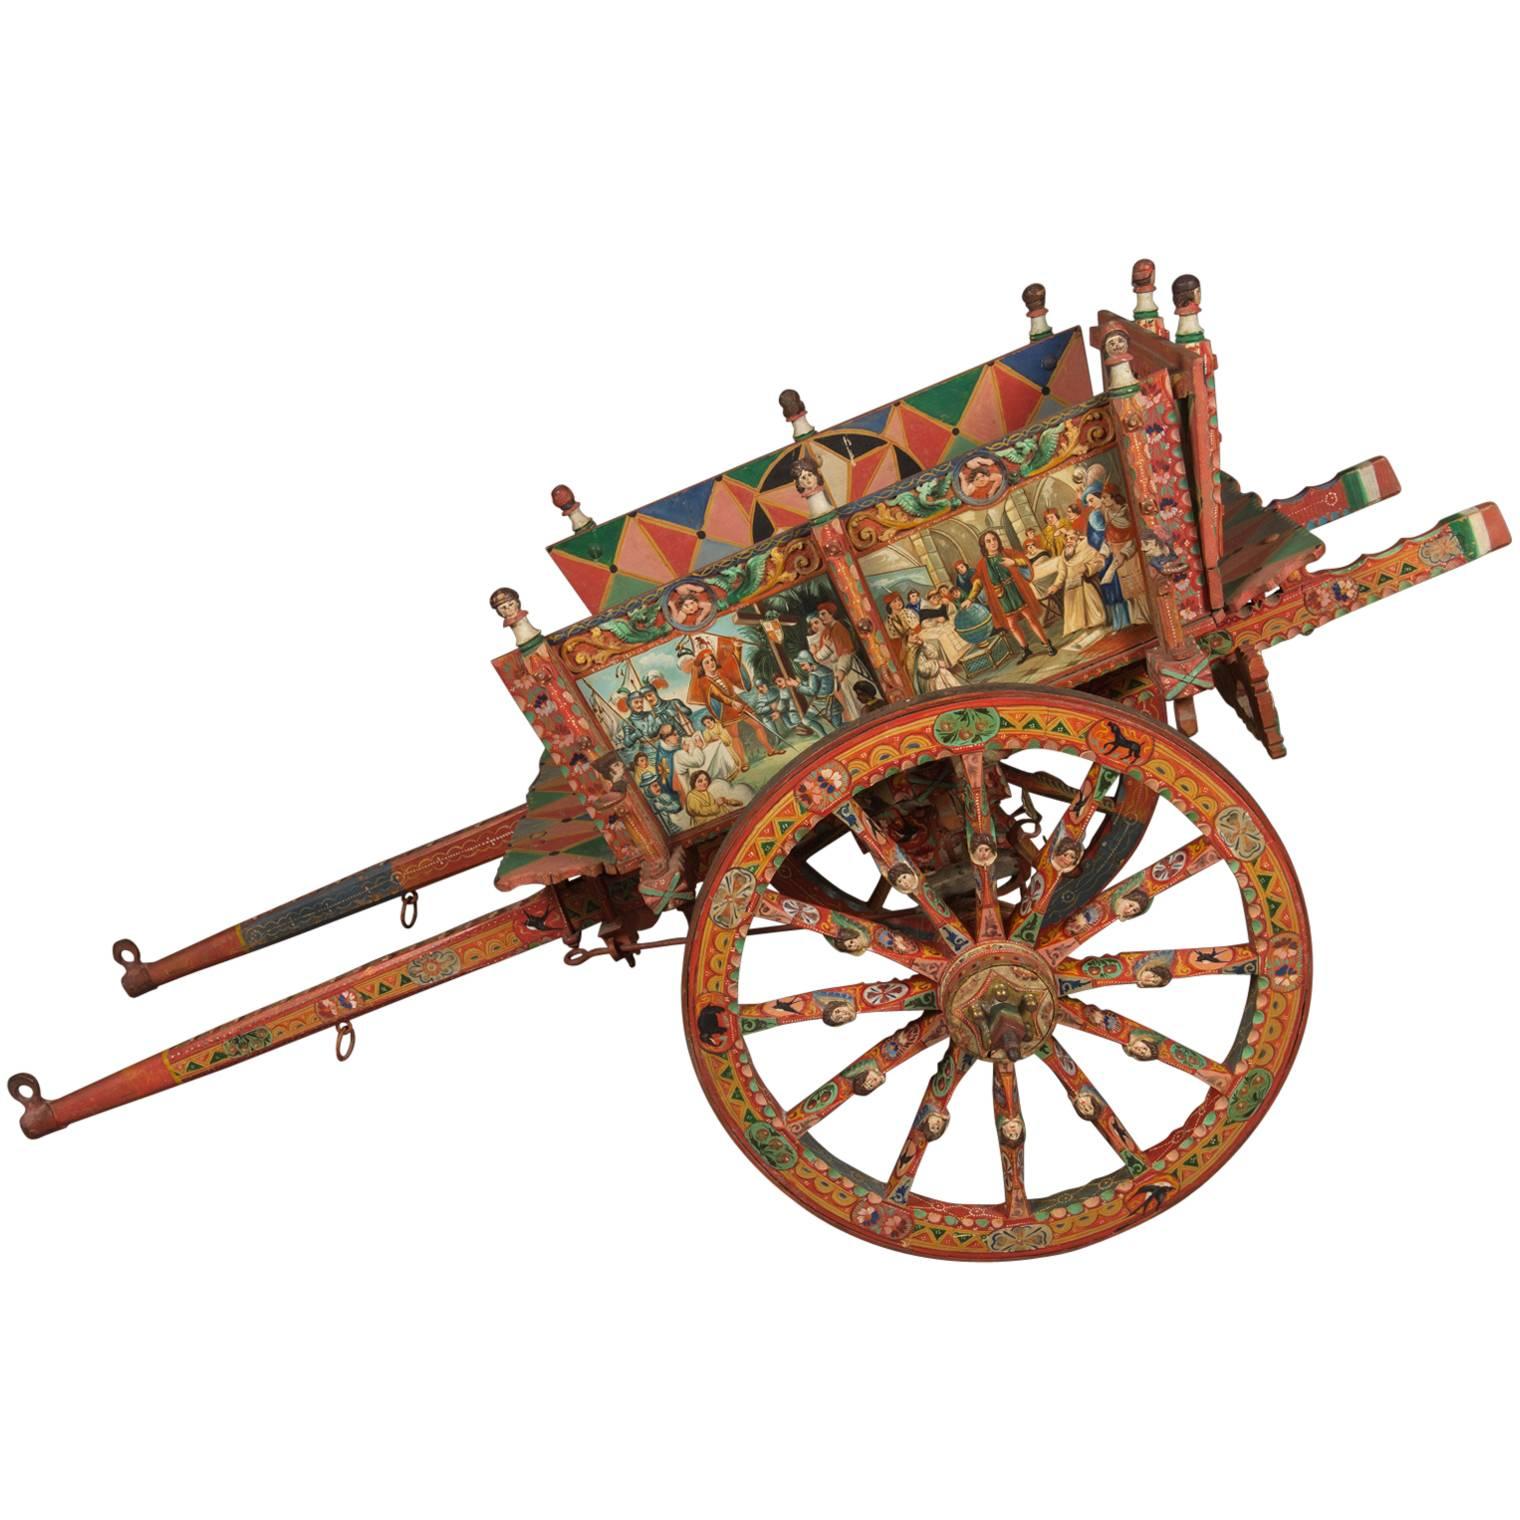 Ornate and Colorful Italian Processional Donkey Cart, circa 1855